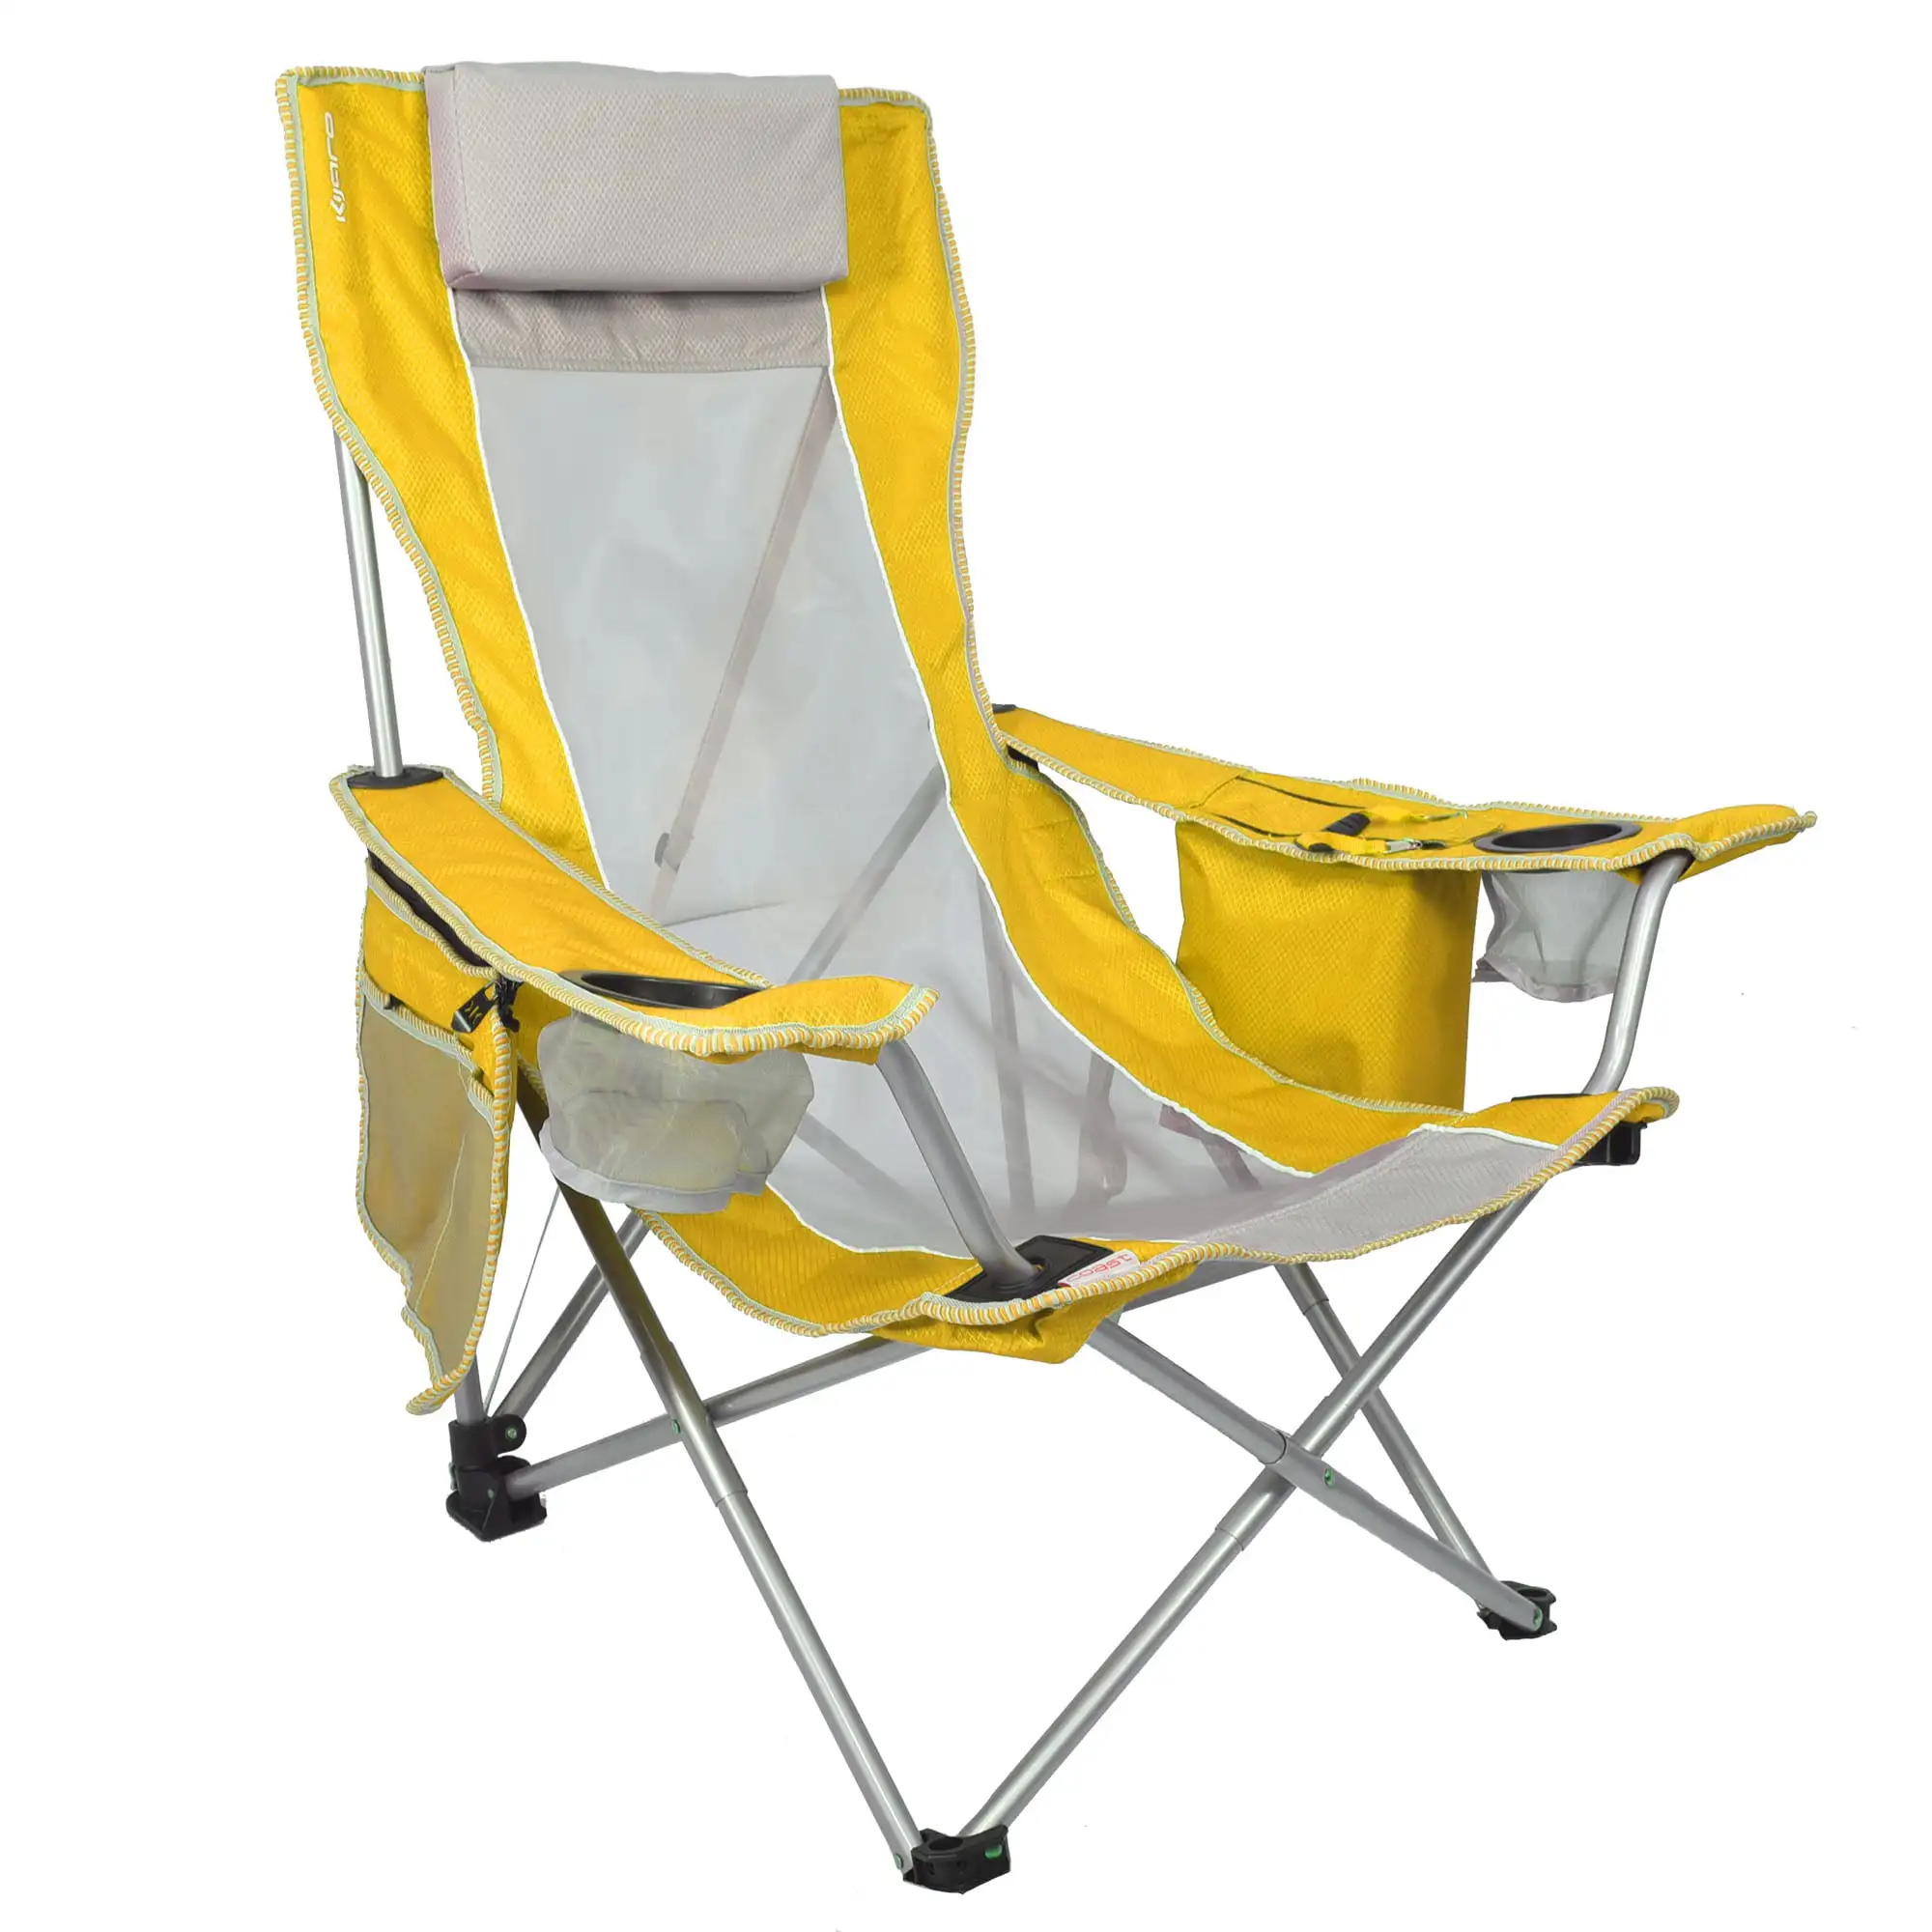 

Coast Beach Sling Chair, Haleakala Sunrise Yellow Camping Chair Folding Chair Beach Chair Foldable Fishing Outdoor Chair